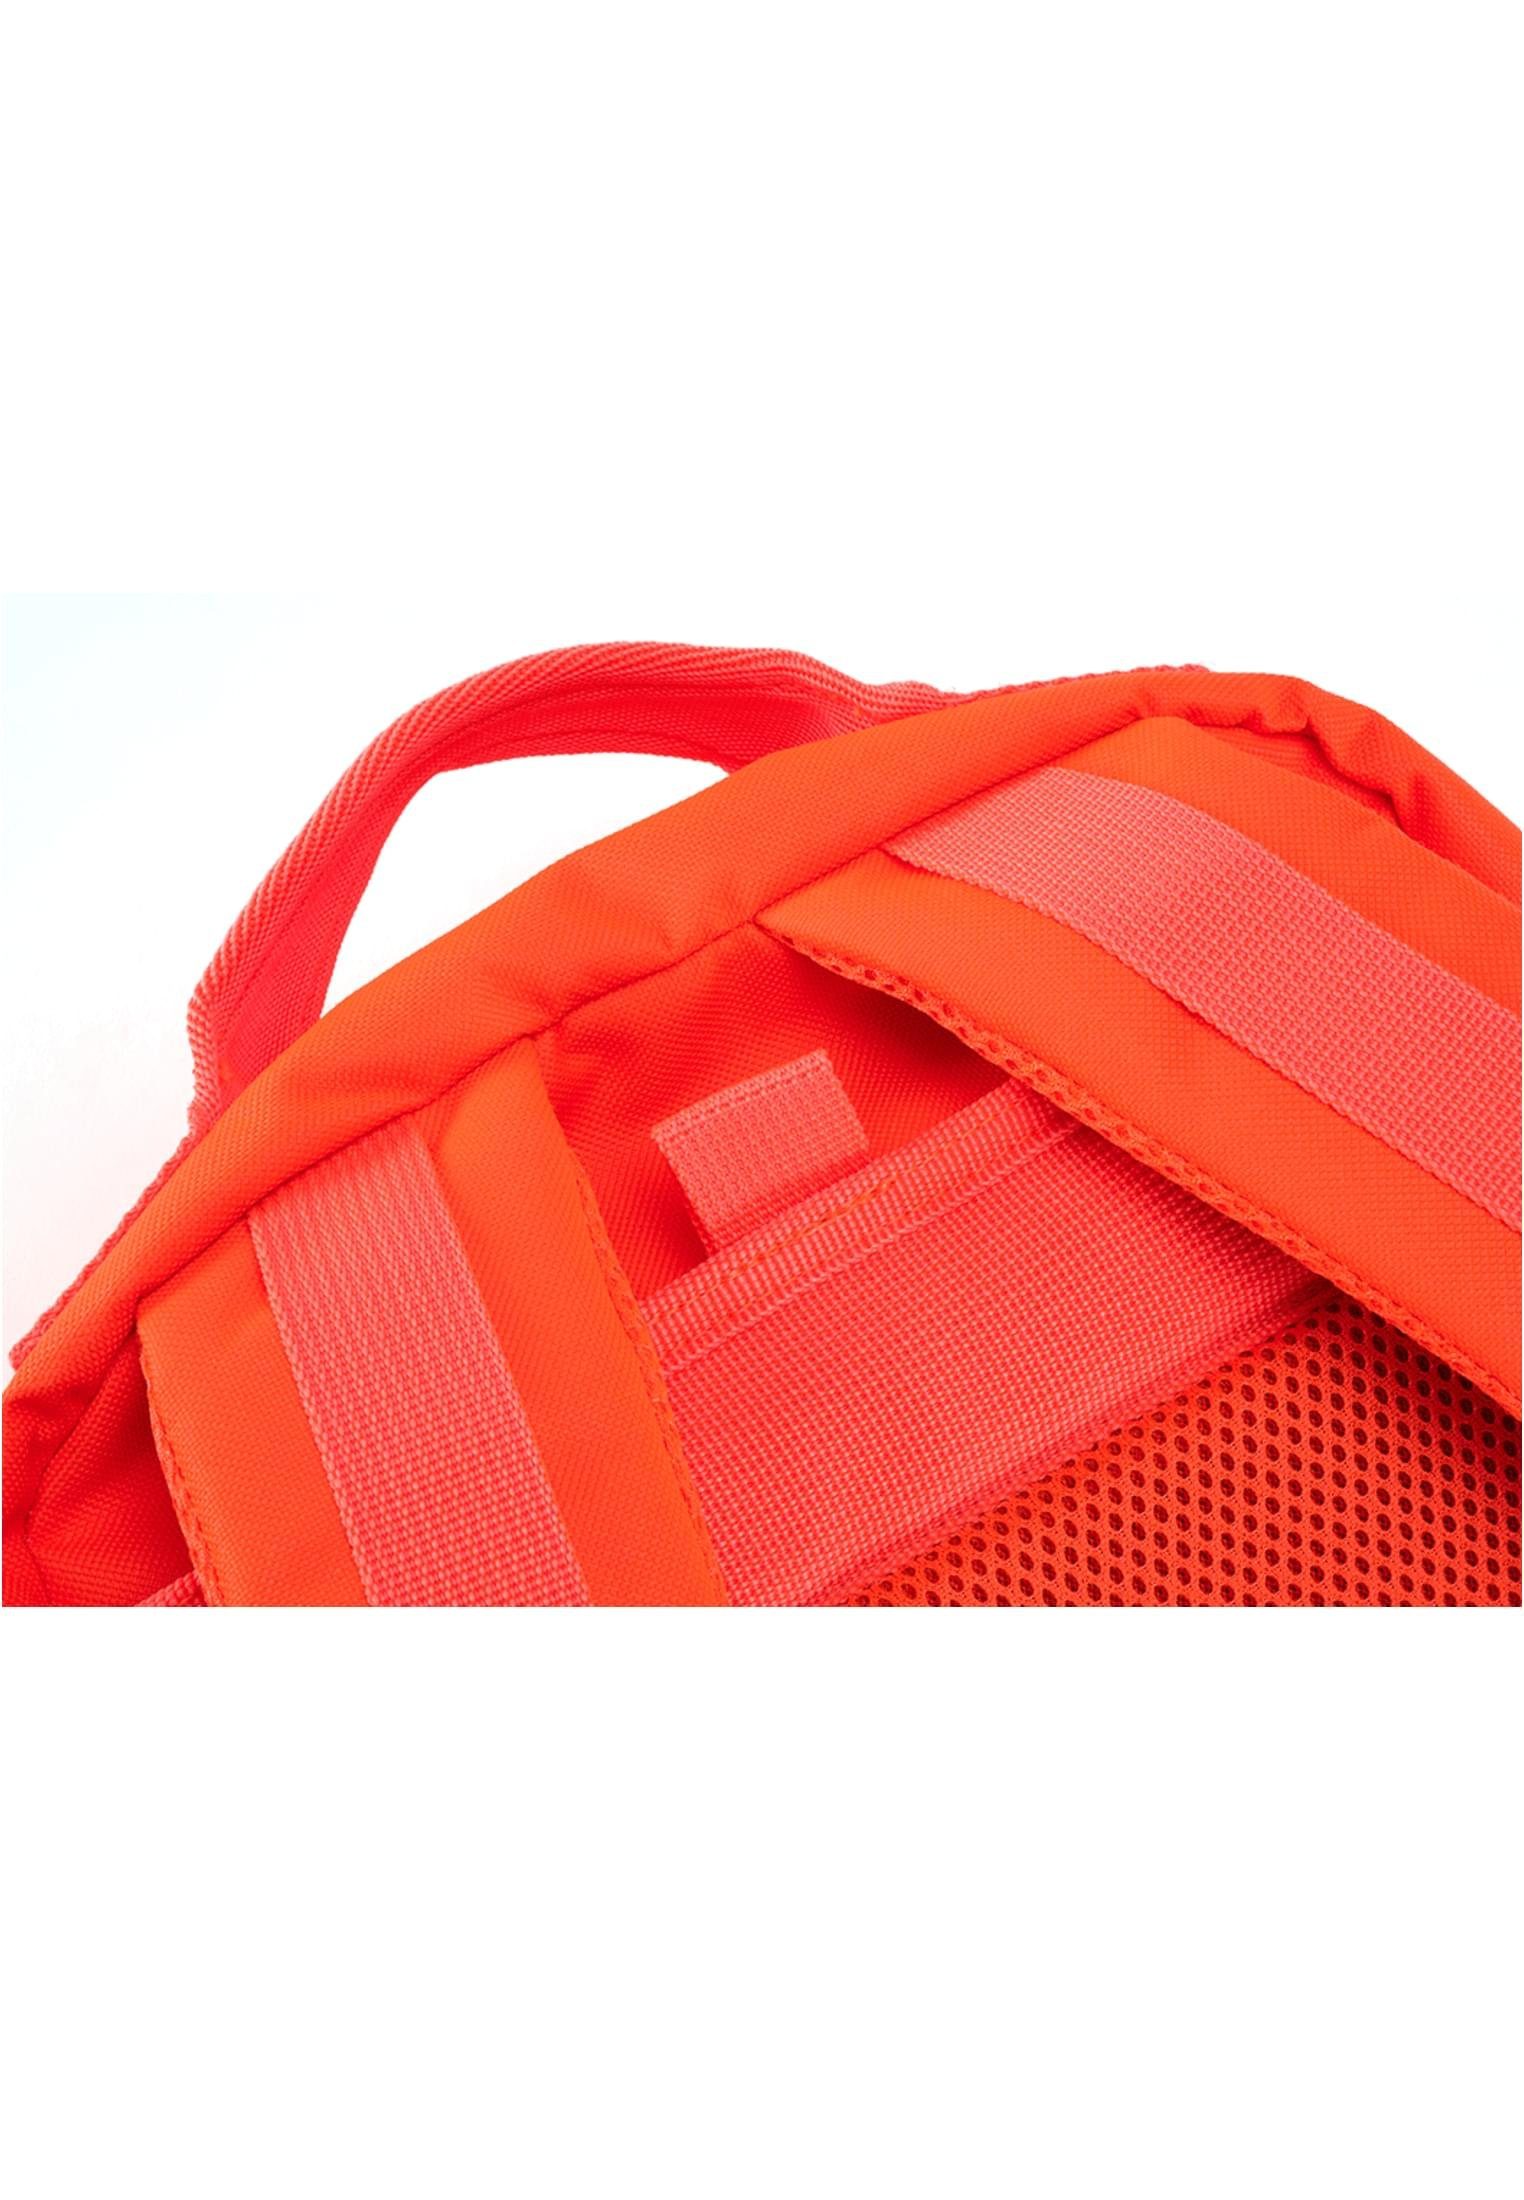 Backpack orange US Cooper Accessoires Rucksack Medium Brandit